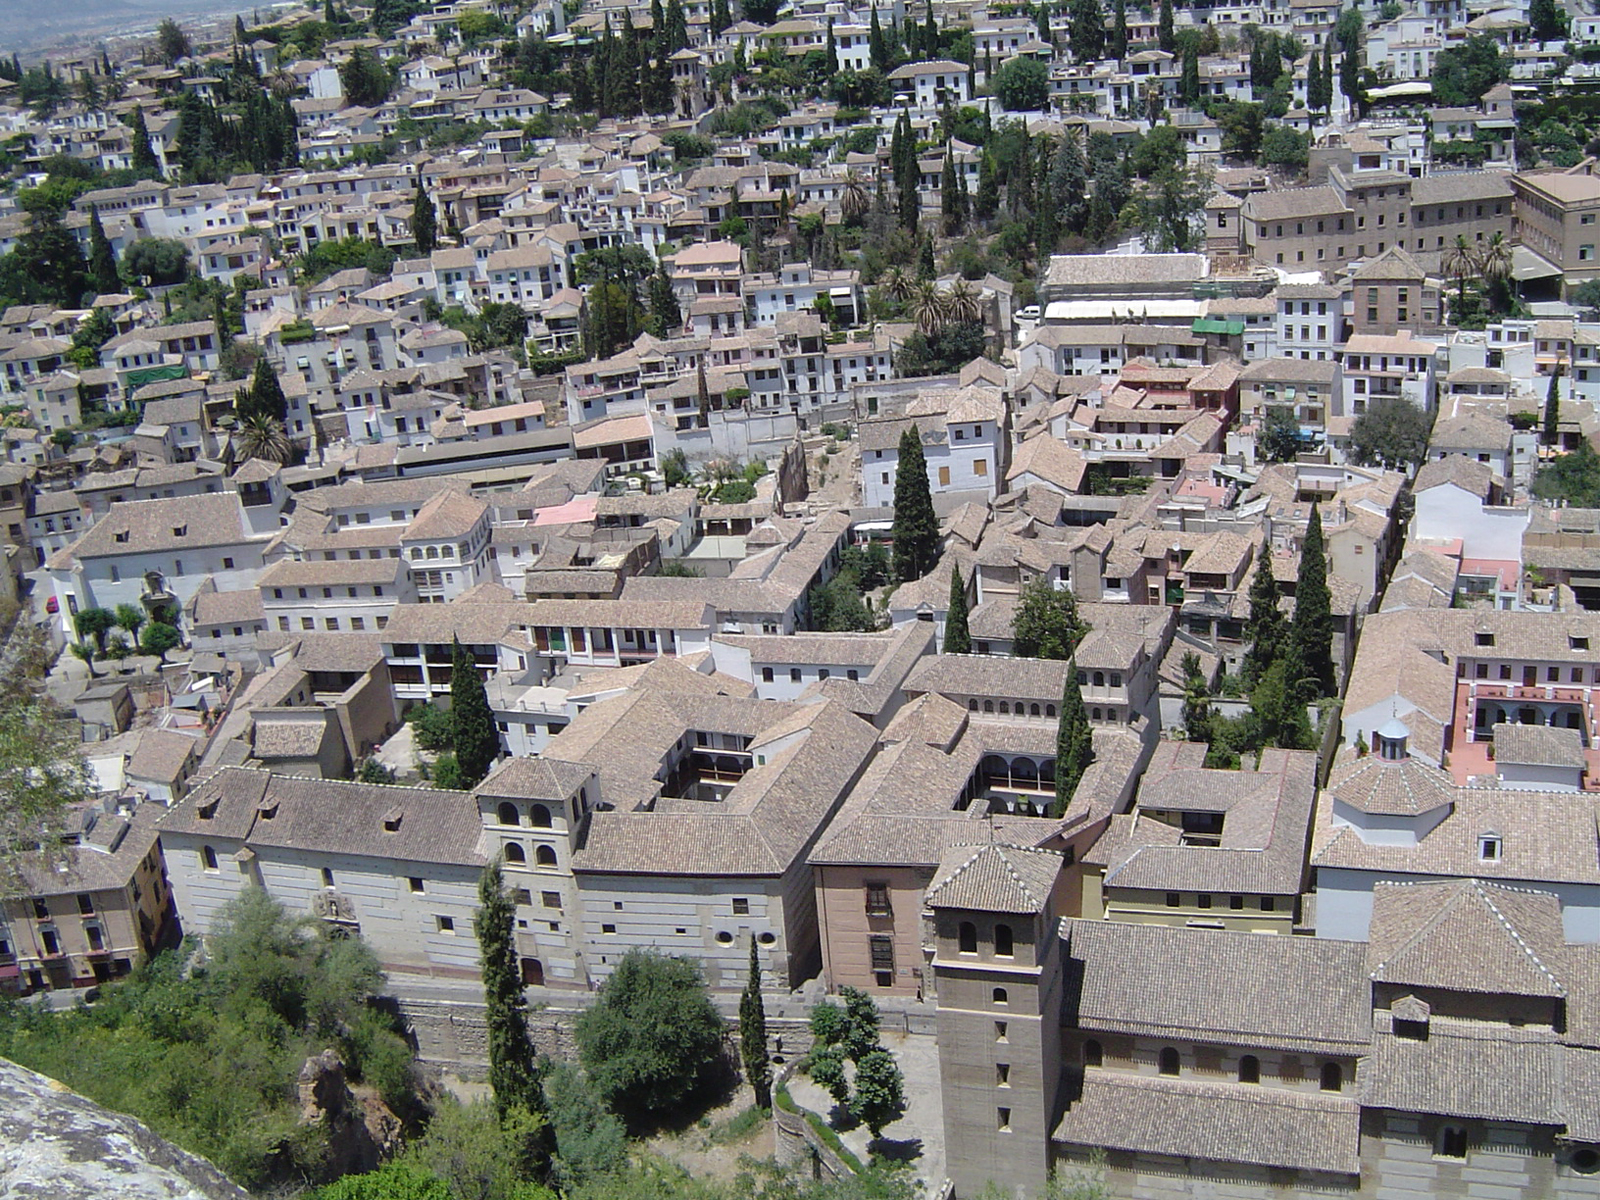 Granada, Spain: Beautiful cityscape with historical architecture against a scenic backdrop.